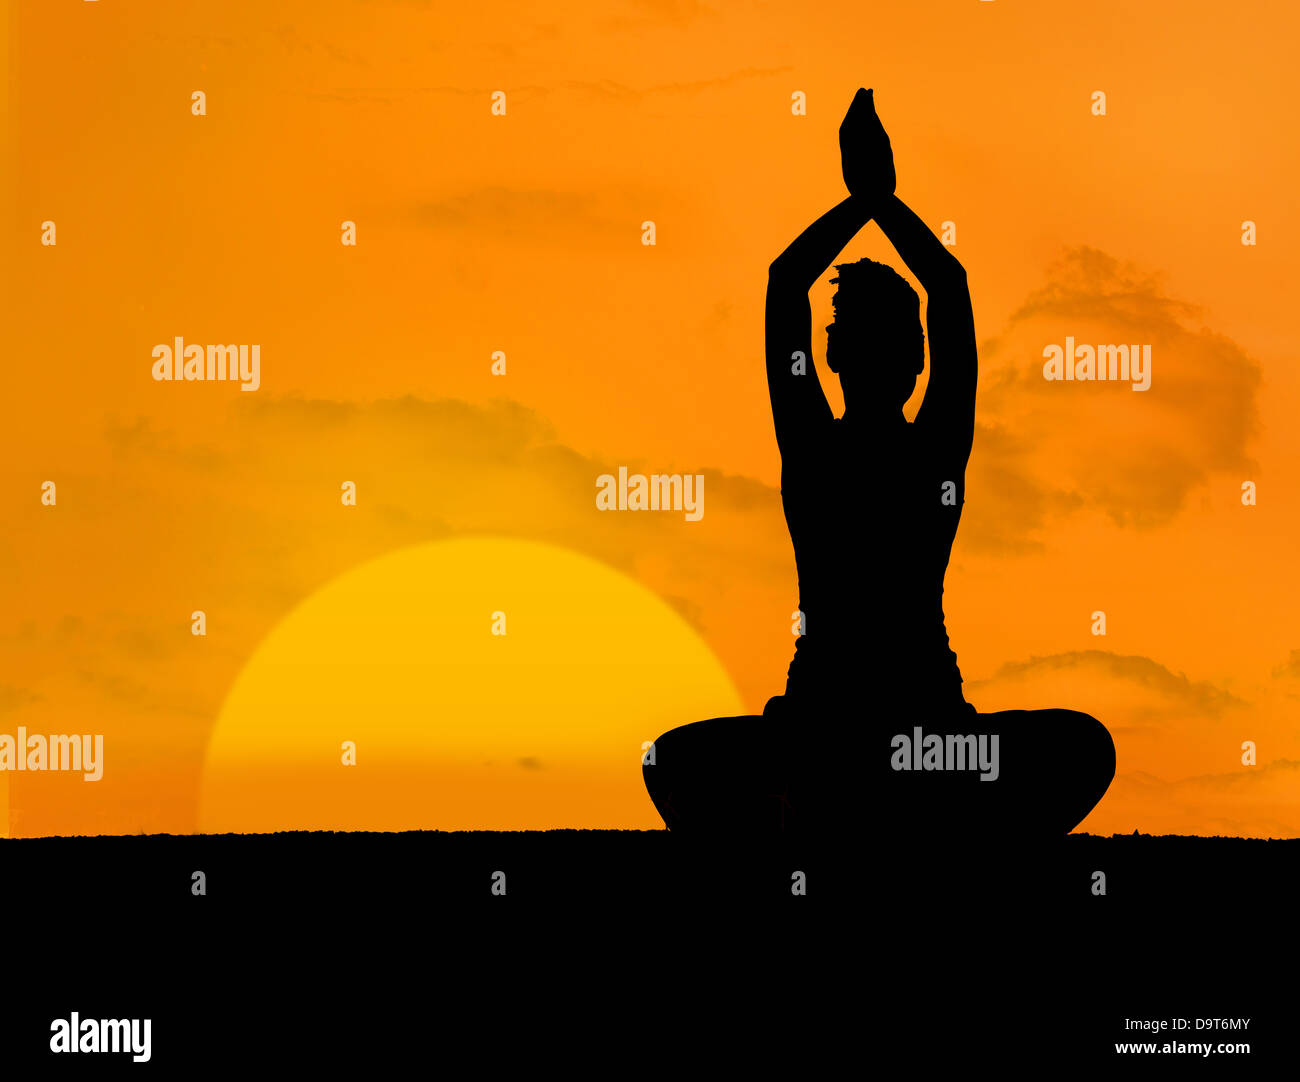 Calm silhouette of woman doing yoga Stock Photo